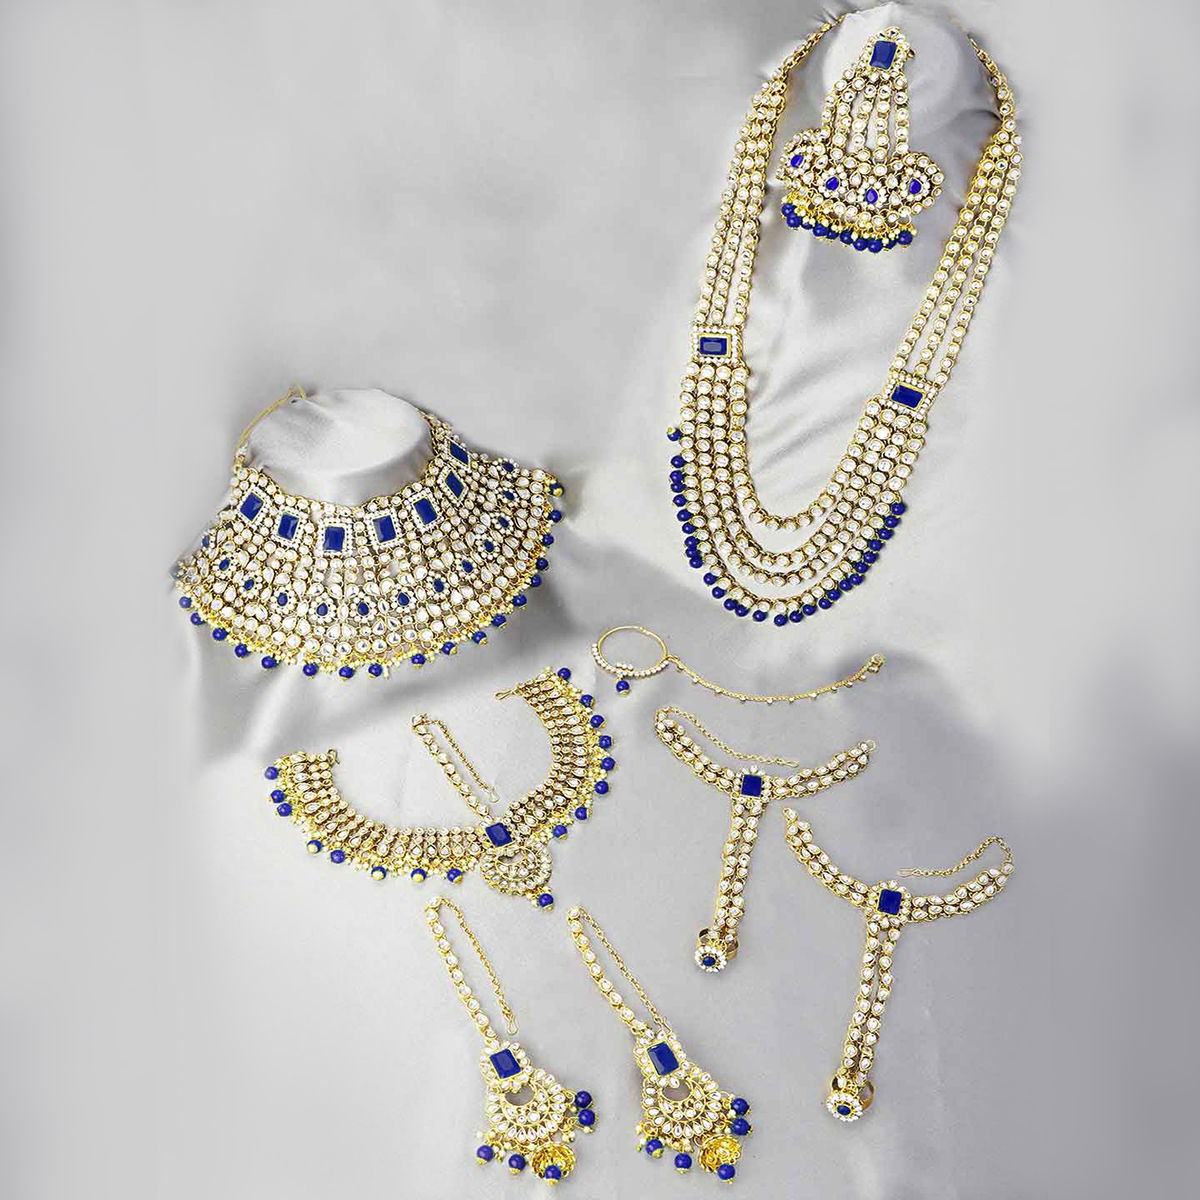 Buy Bridal Jewelry Set Pakistani Jewelry Set Indian Jewelry Set Online in  India  Etsy  Hyderabadi jewelry Bridal jewelry sets Buy bridal jewellery